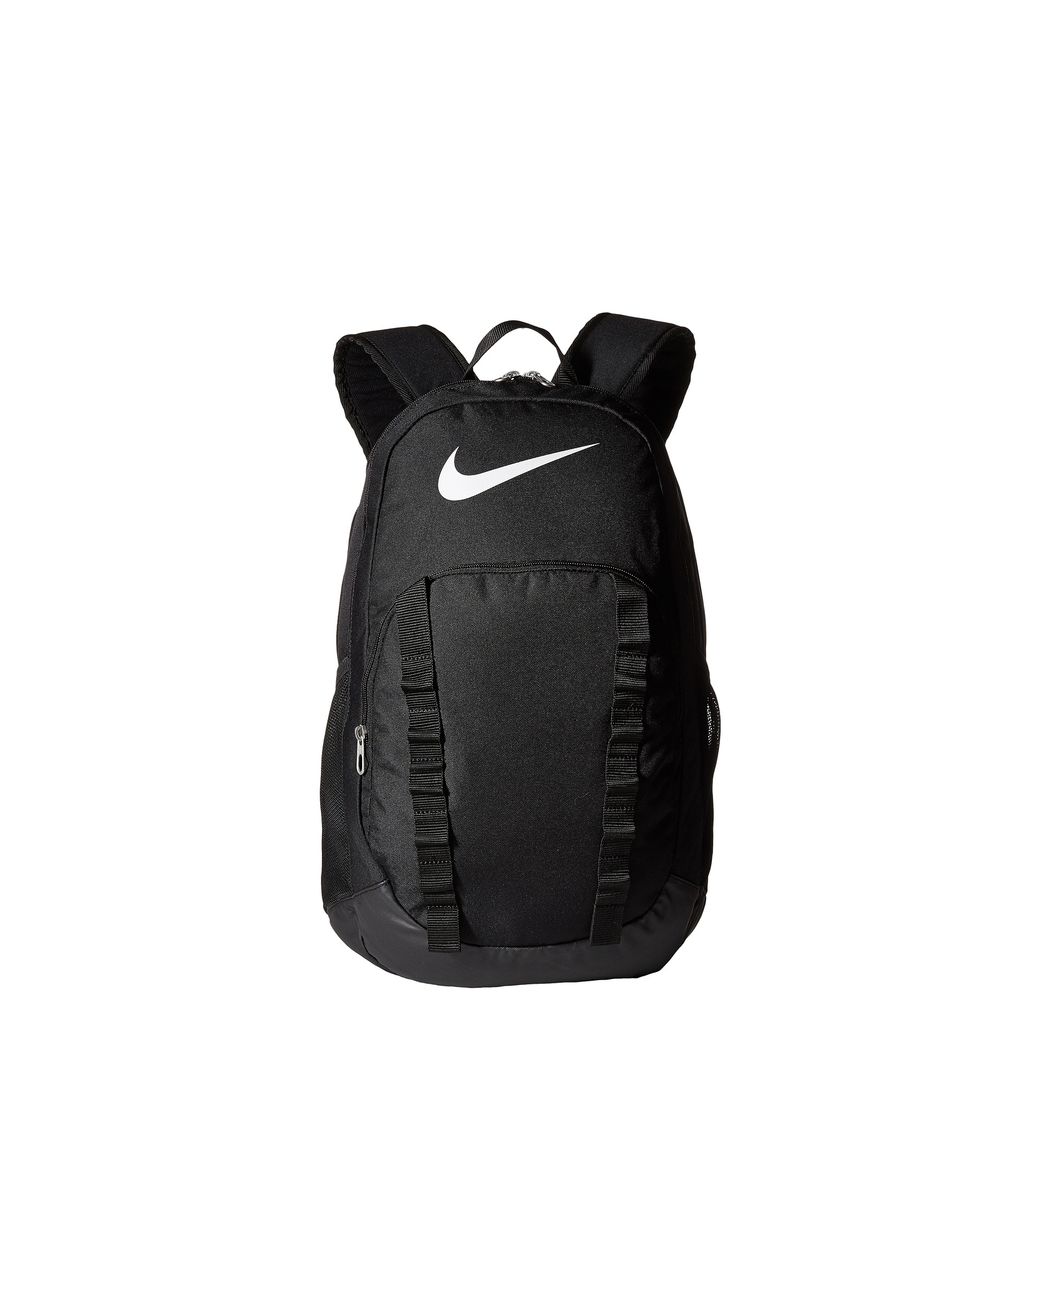 Nike Brasilia 7 Backpack Xl in Black | Lyst